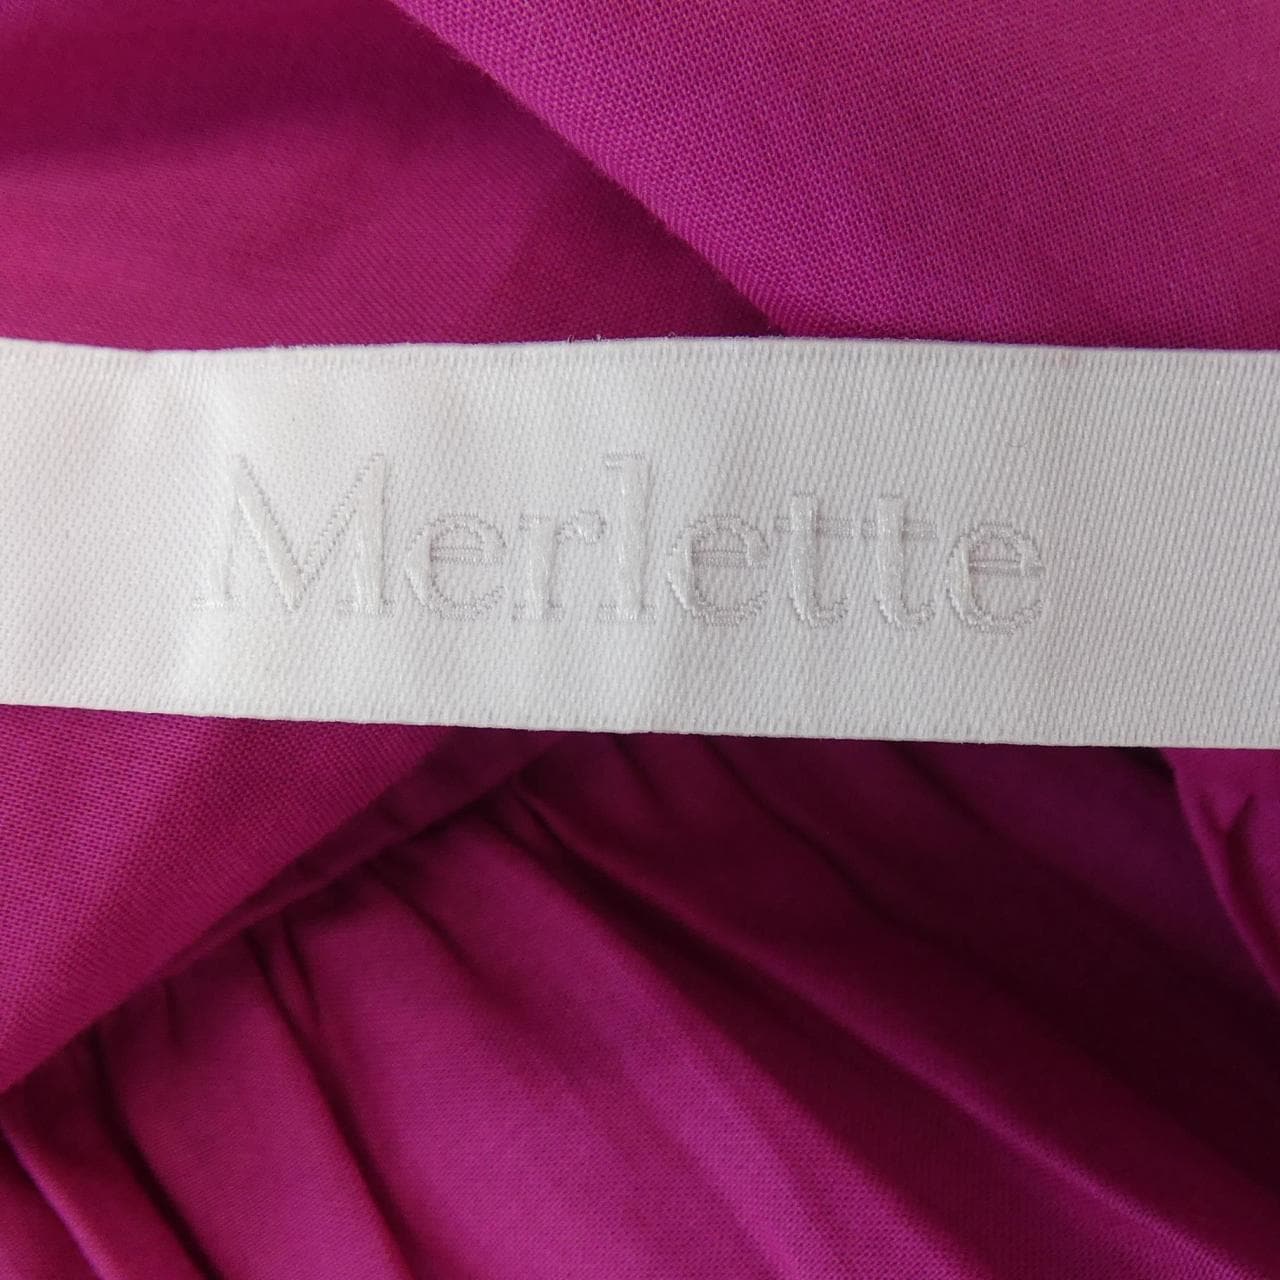 Merlette one piece